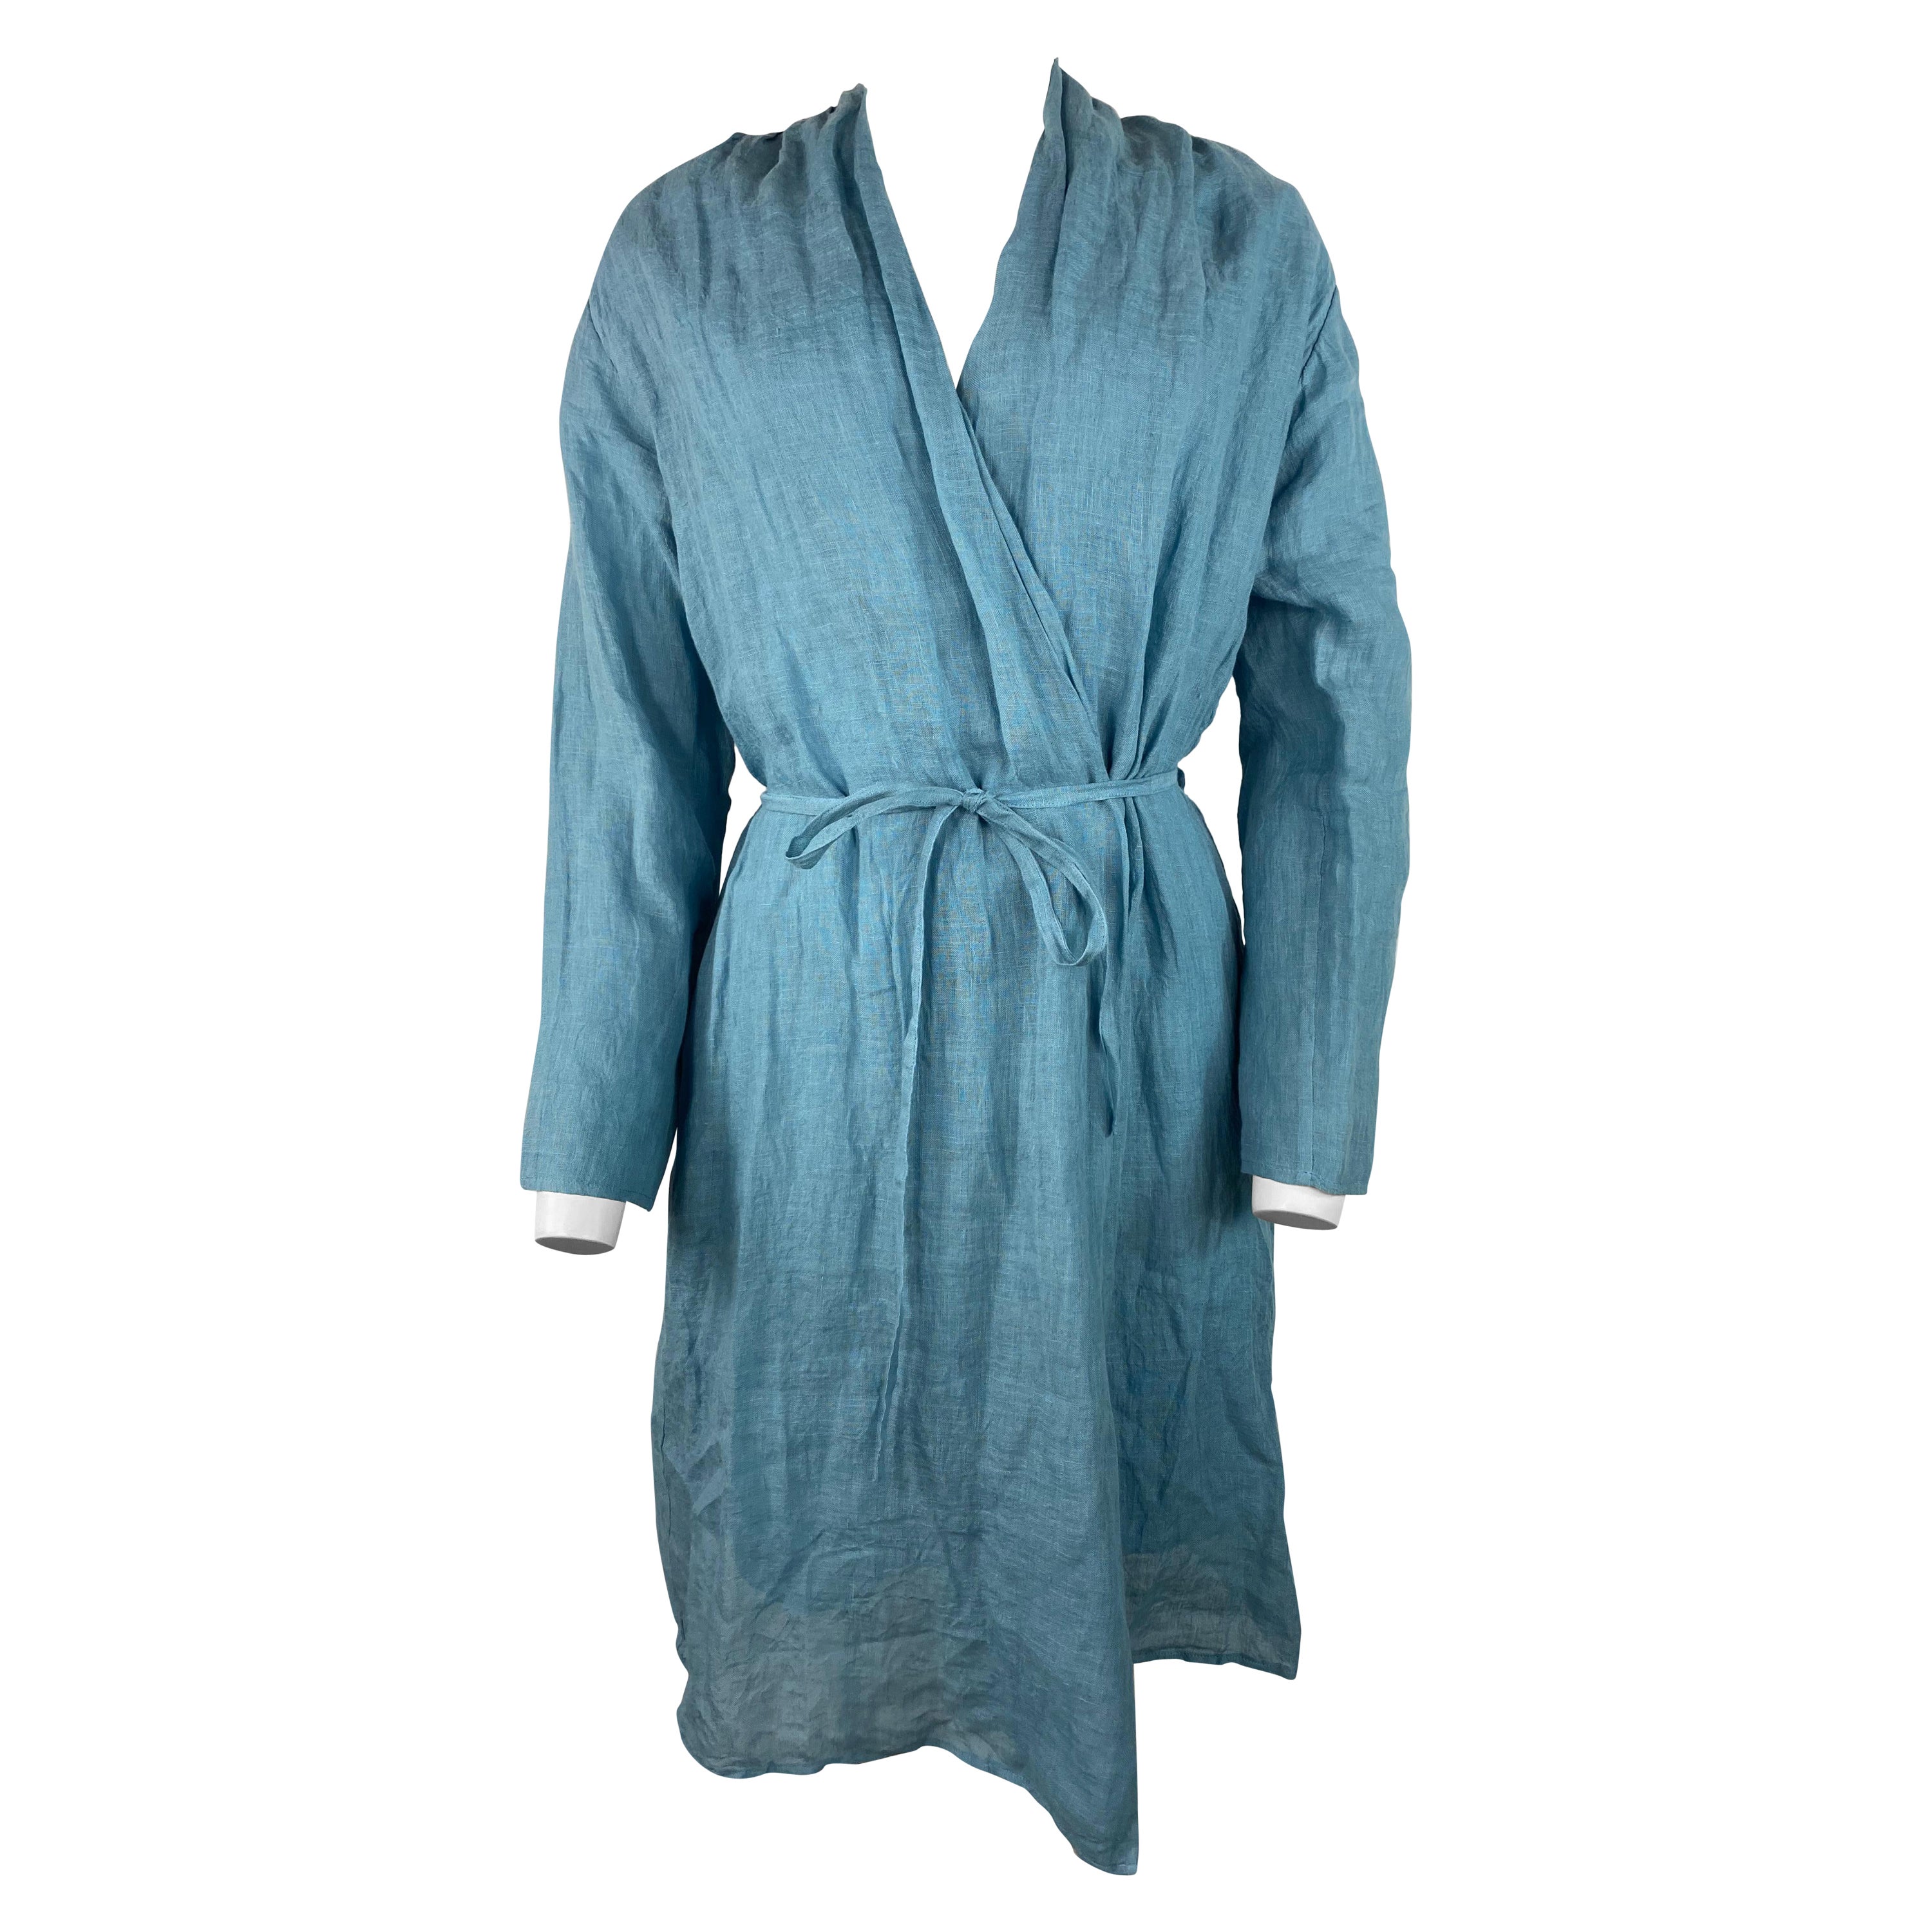 Enrico Blue Linen Robe Jacket Dress, Size 38